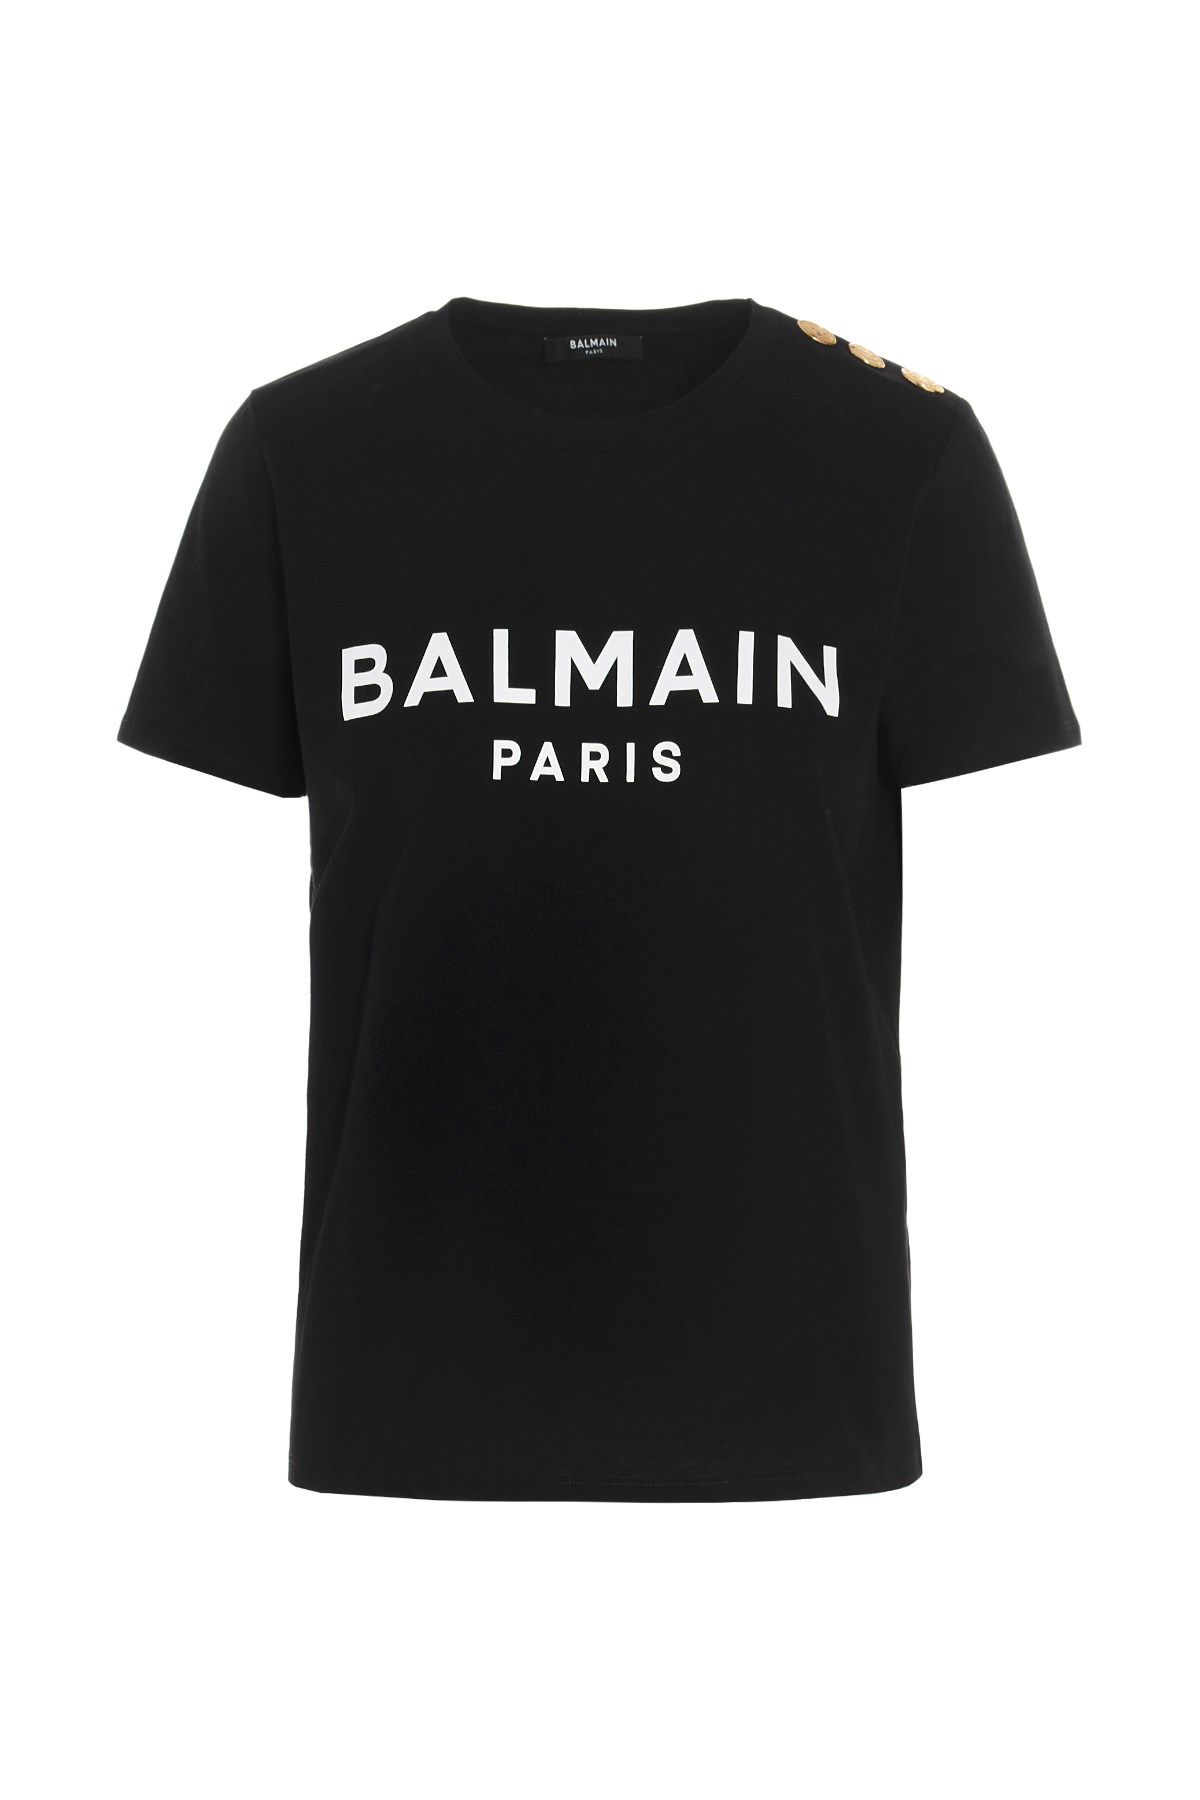 BALMAIN T-Shirt Mit Goldenfarbenem Knopf